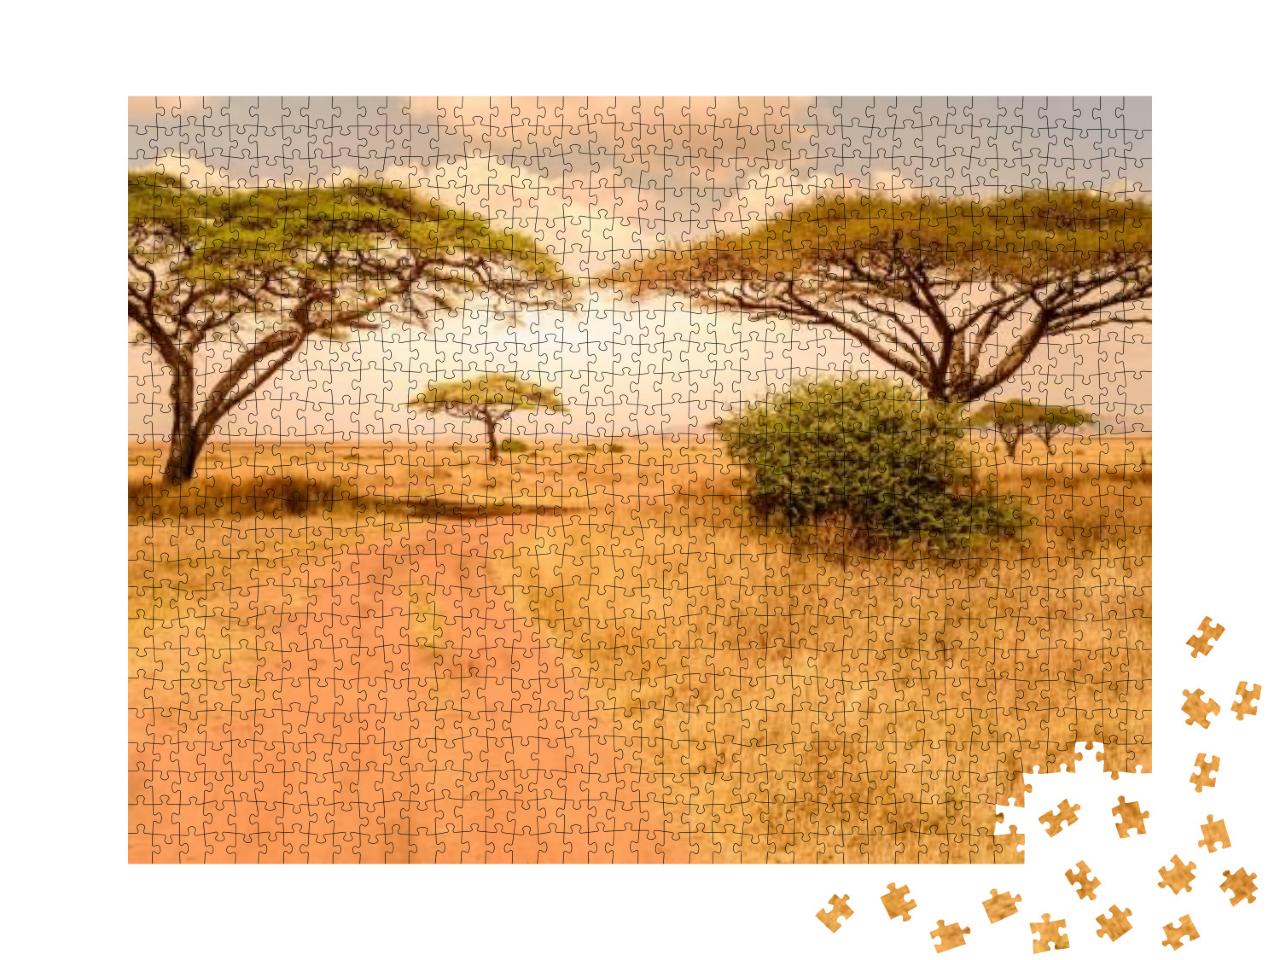 Puzzle 1000 Teile „Straße durch den Serengeti-Nationalpark, Tansania, Afrika“